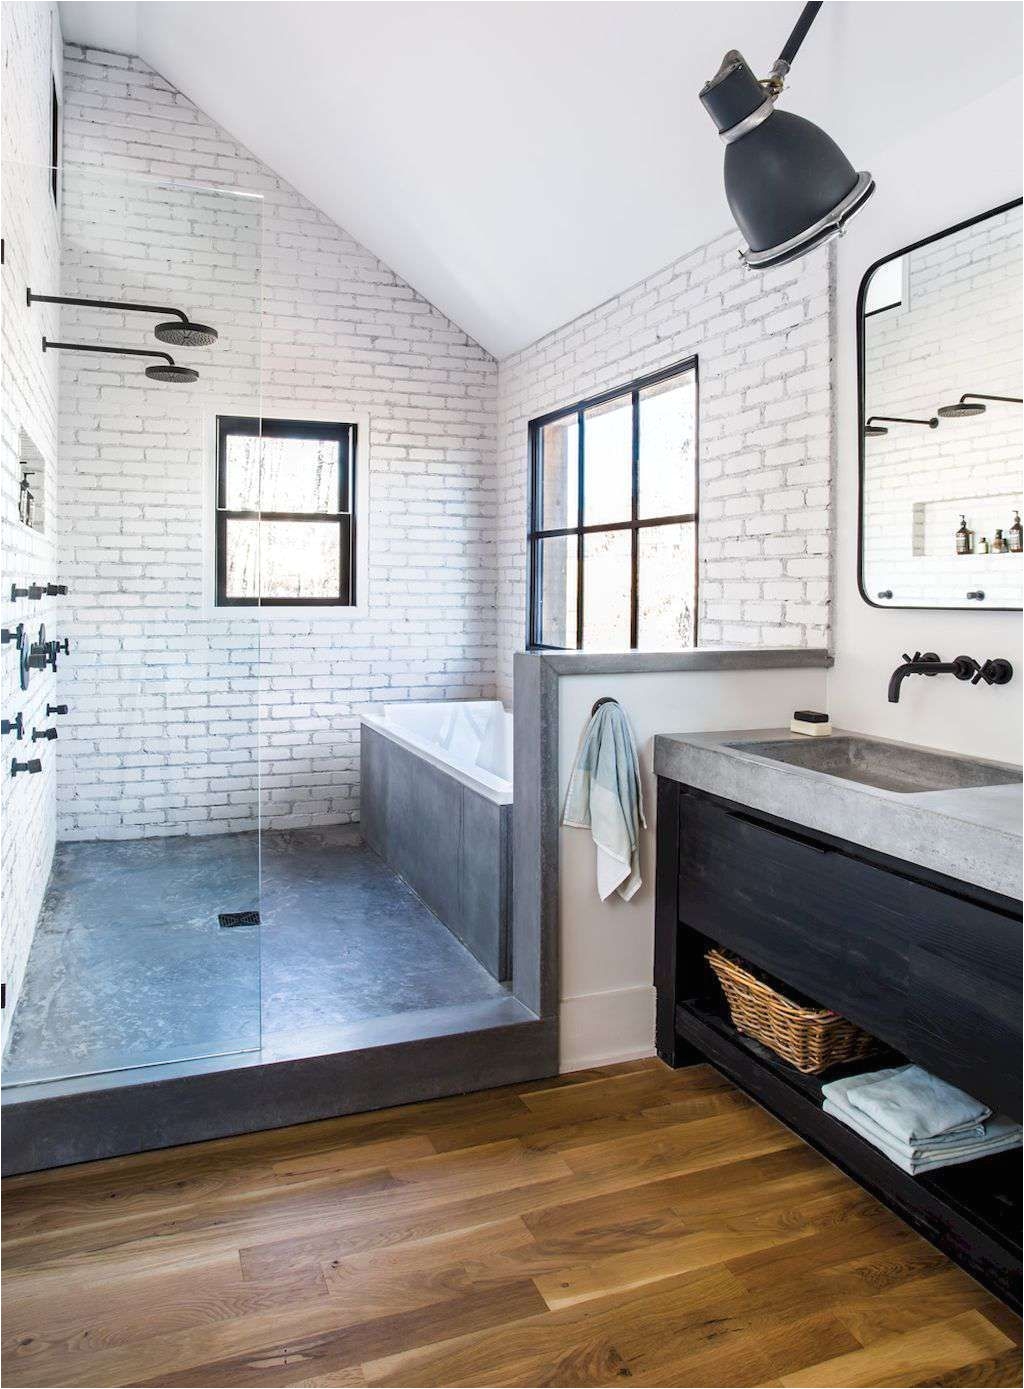 Find more below Traditional Japanese Bathroom Wood Japanese Bathroom Design Ideas Concrete Apartment Japanese Bathroom